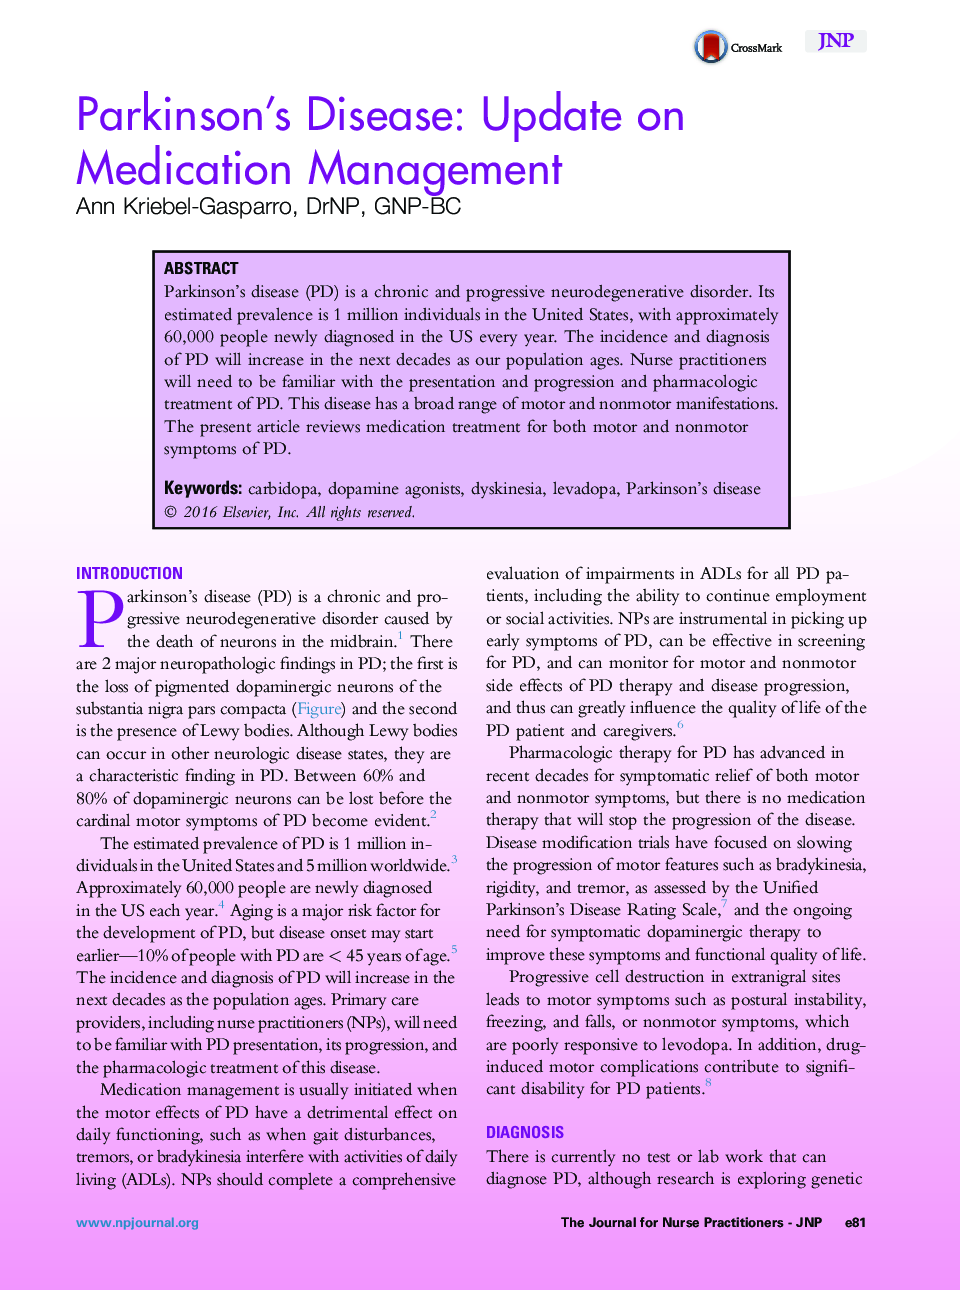 Parkinson’s Disease: Update on Medication Management 